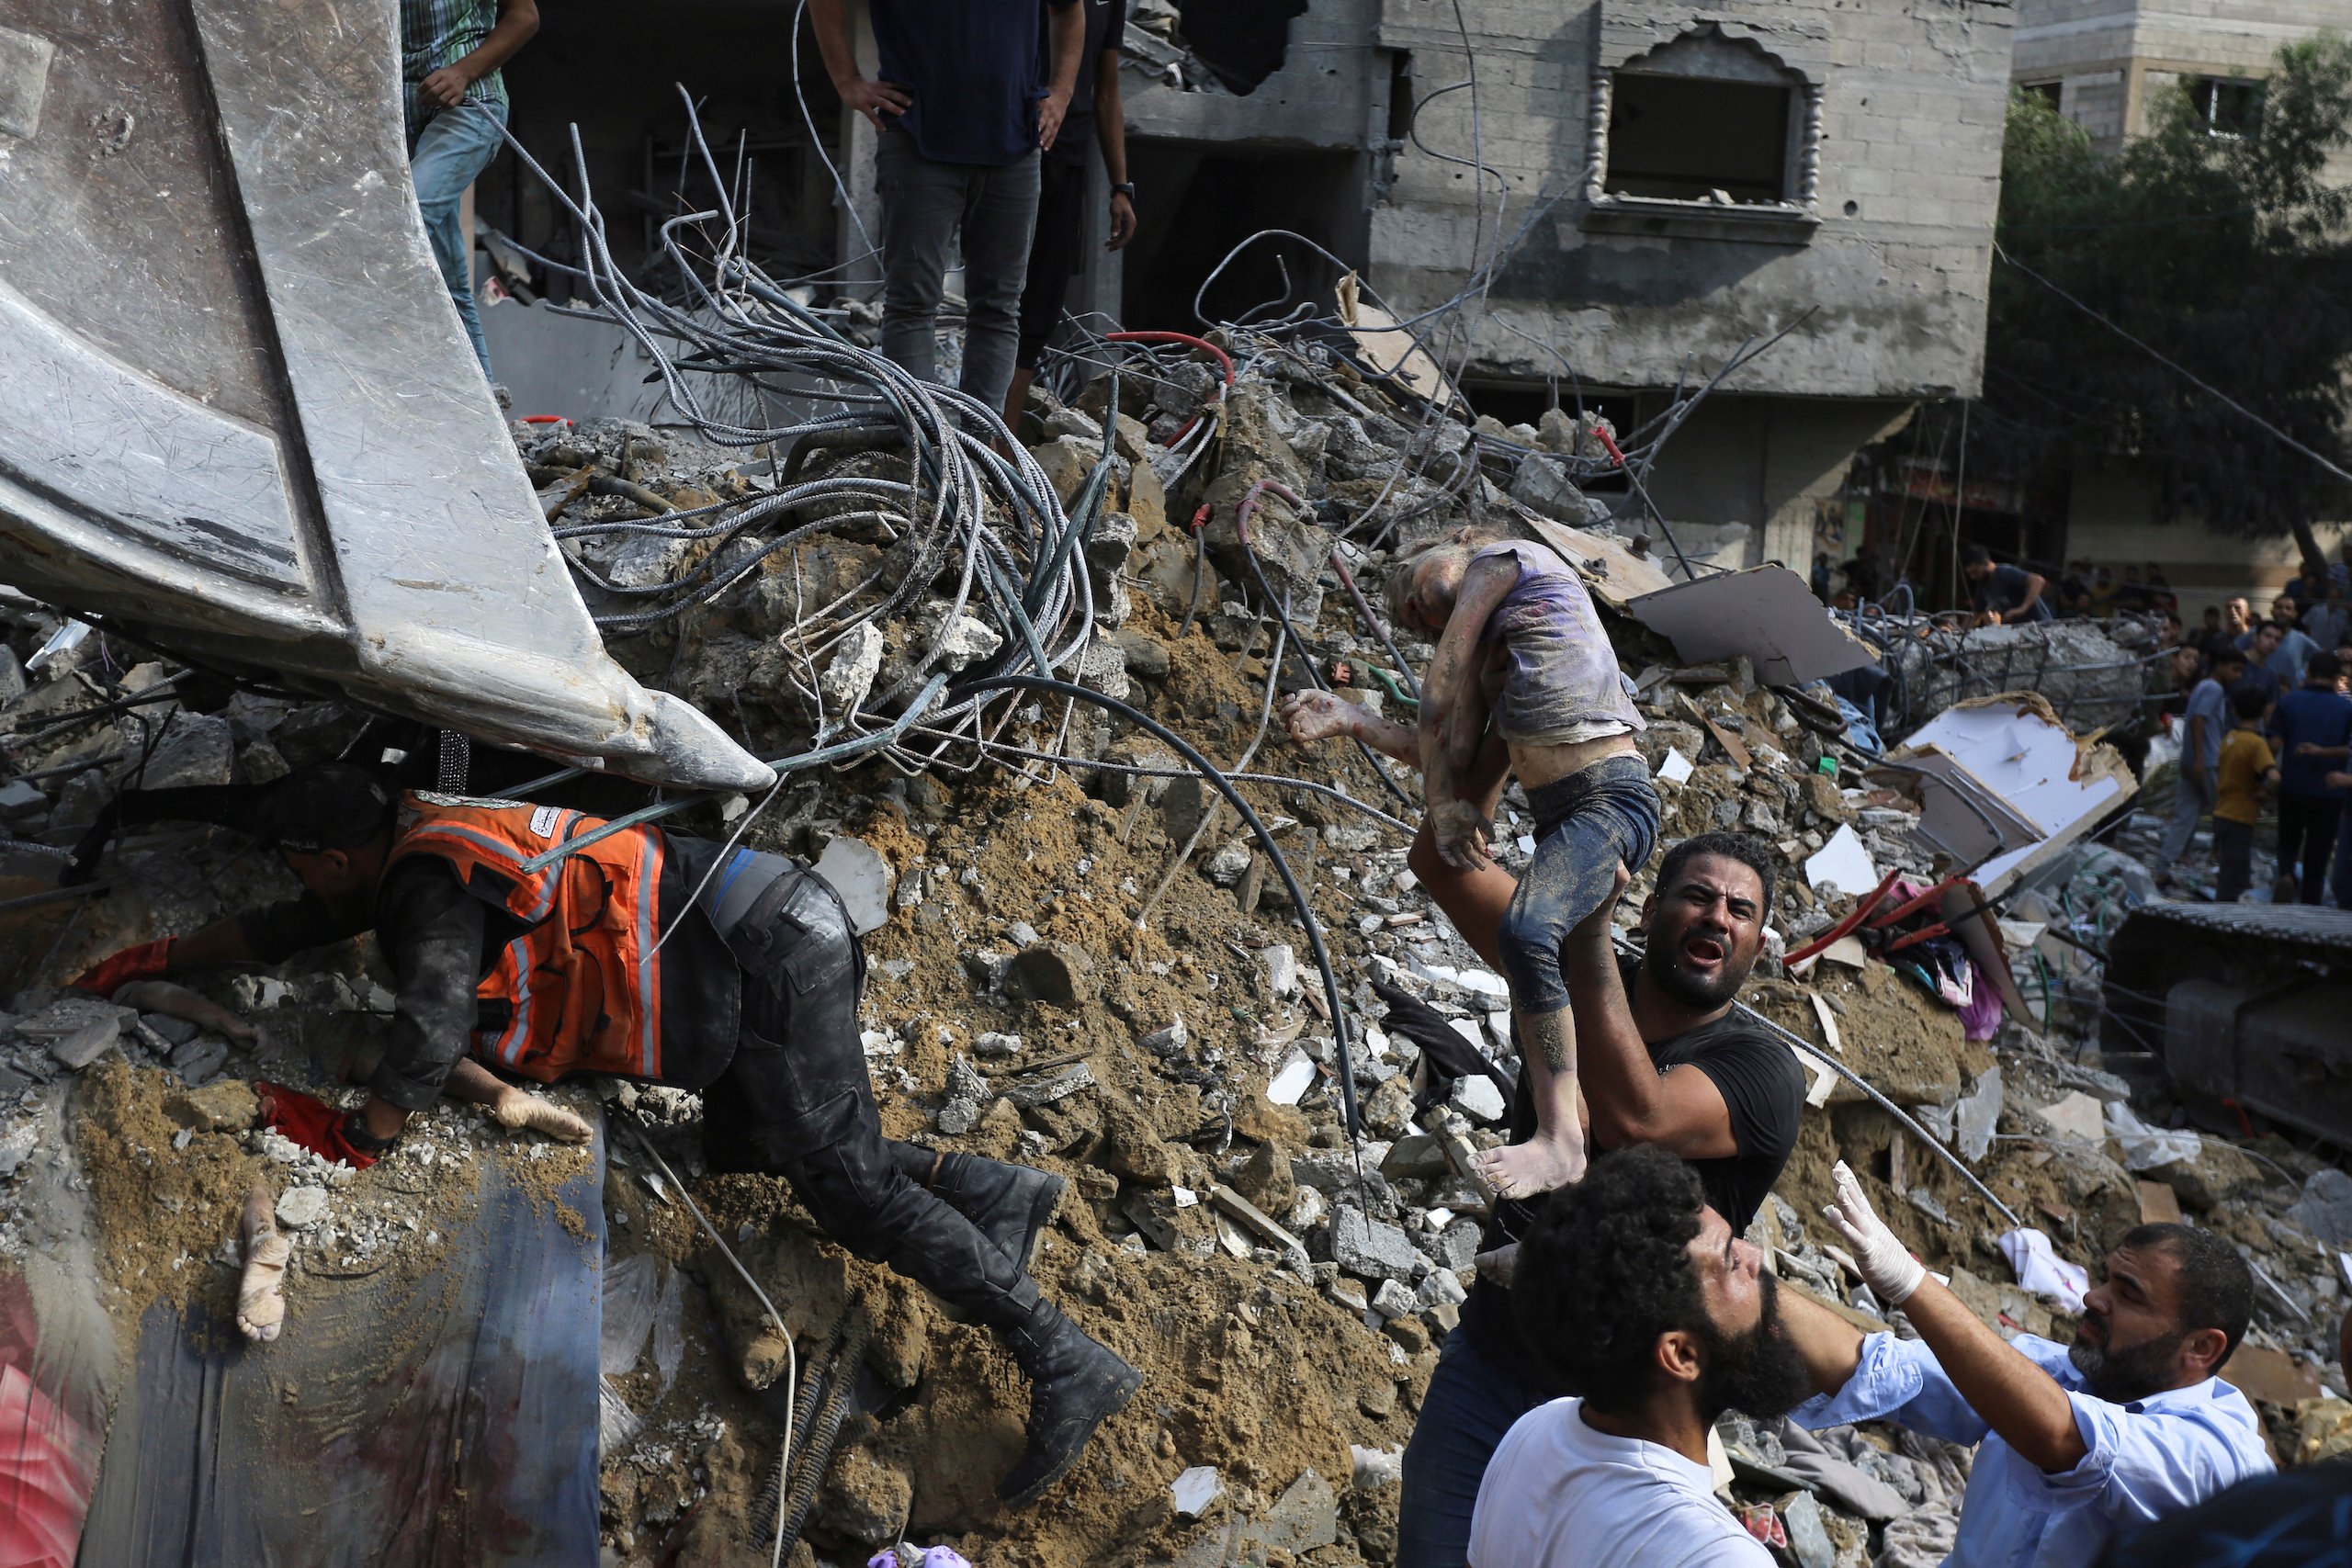 Gaza Internet Connectivity Decimated as Israel Bombs